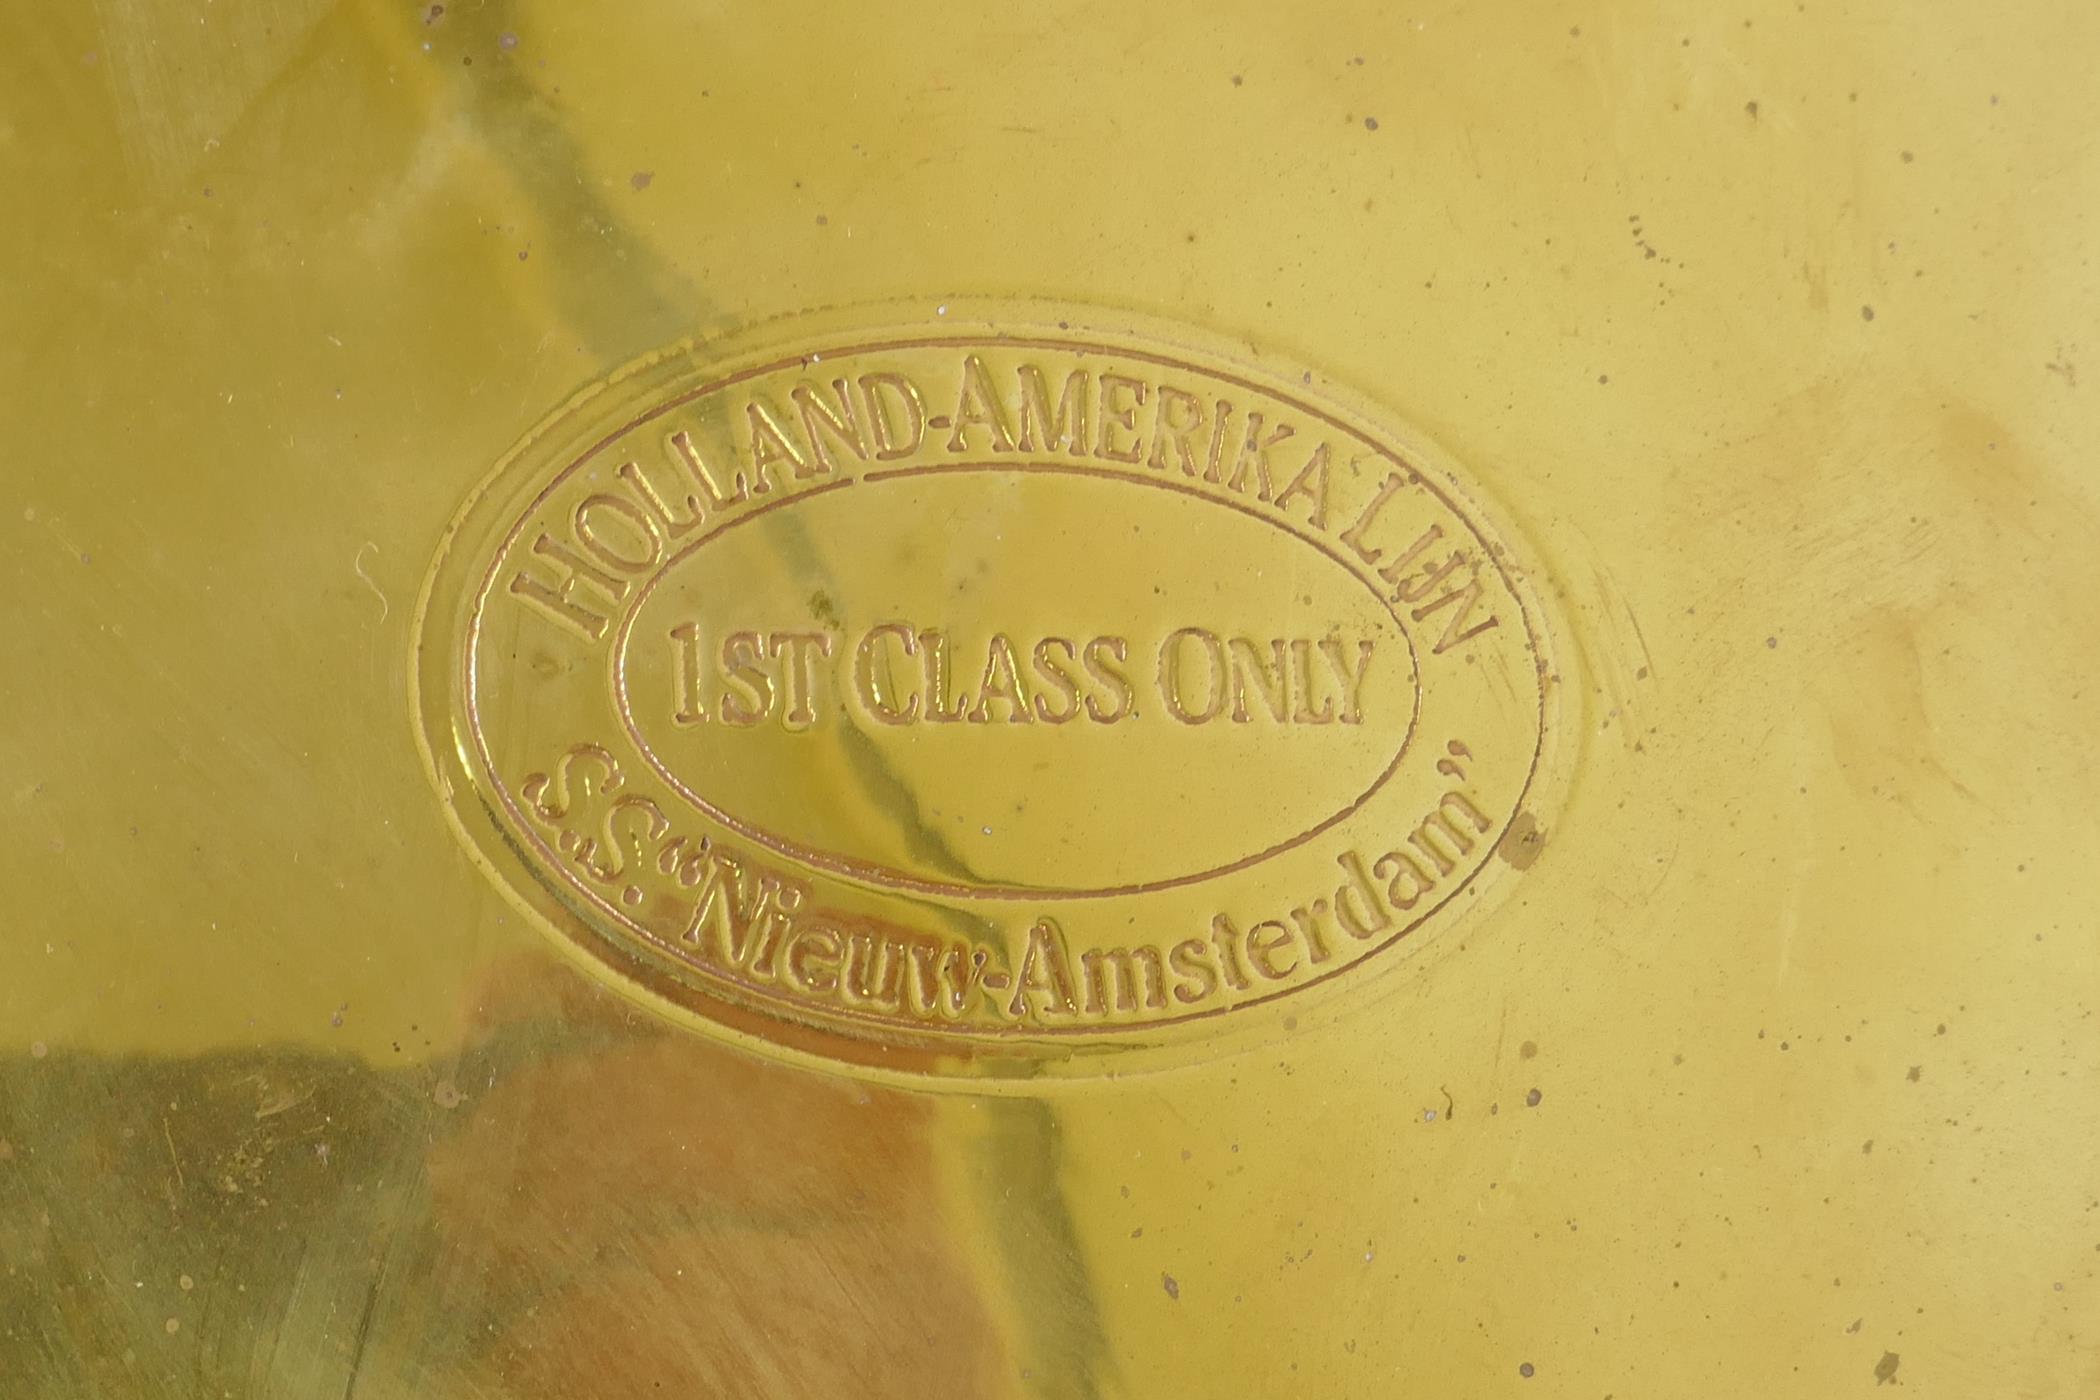 A brass tray engraved SS Nieuw-Amsterdam Holland-Amerika Lijn, 1st Class Only, 34cm diameter - Image 2 of 2